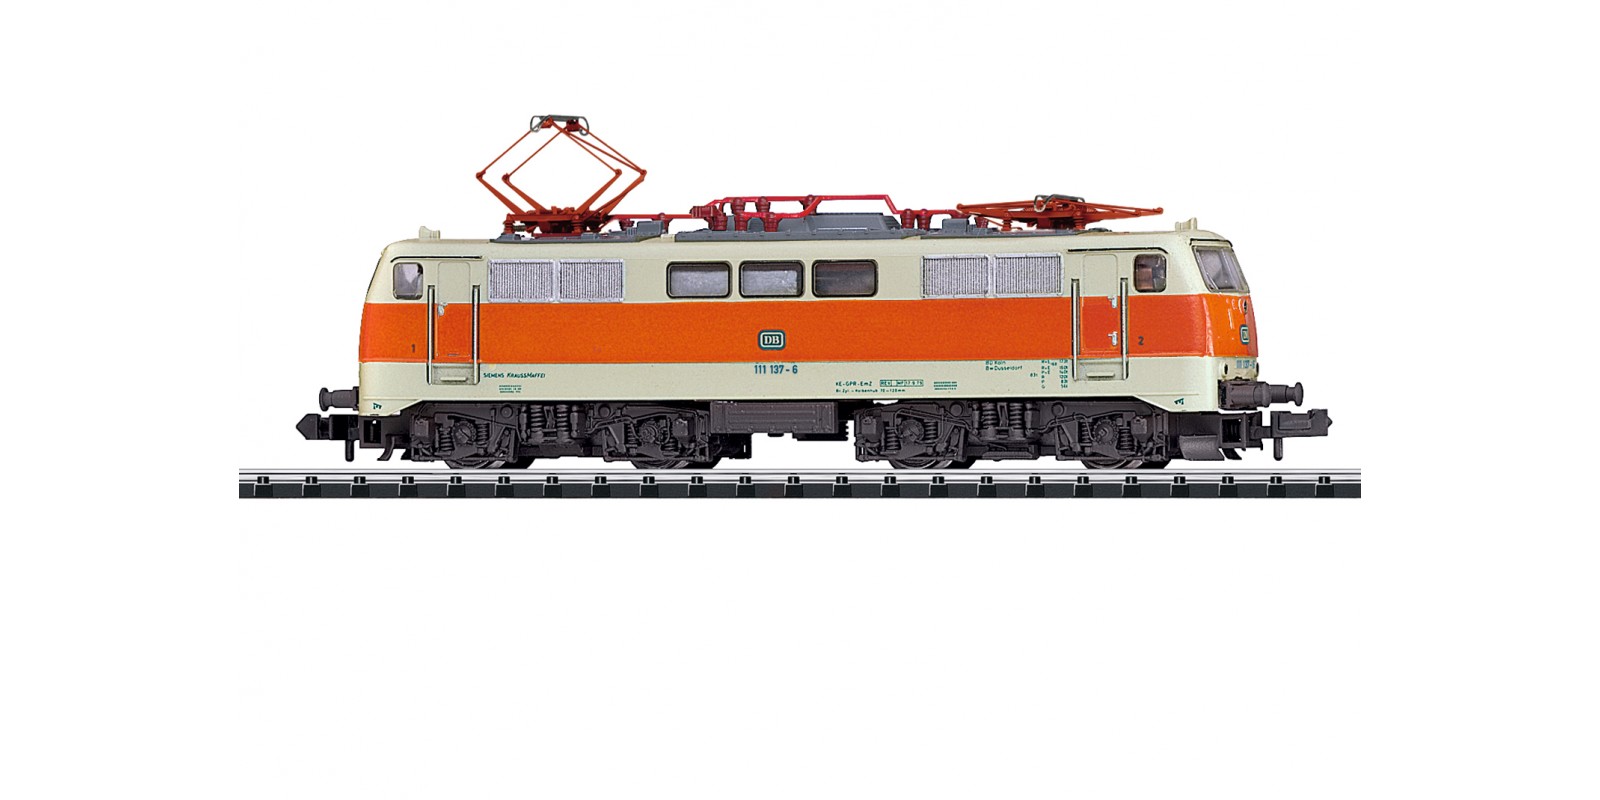 T16114 Class 111 Electric Locomotive